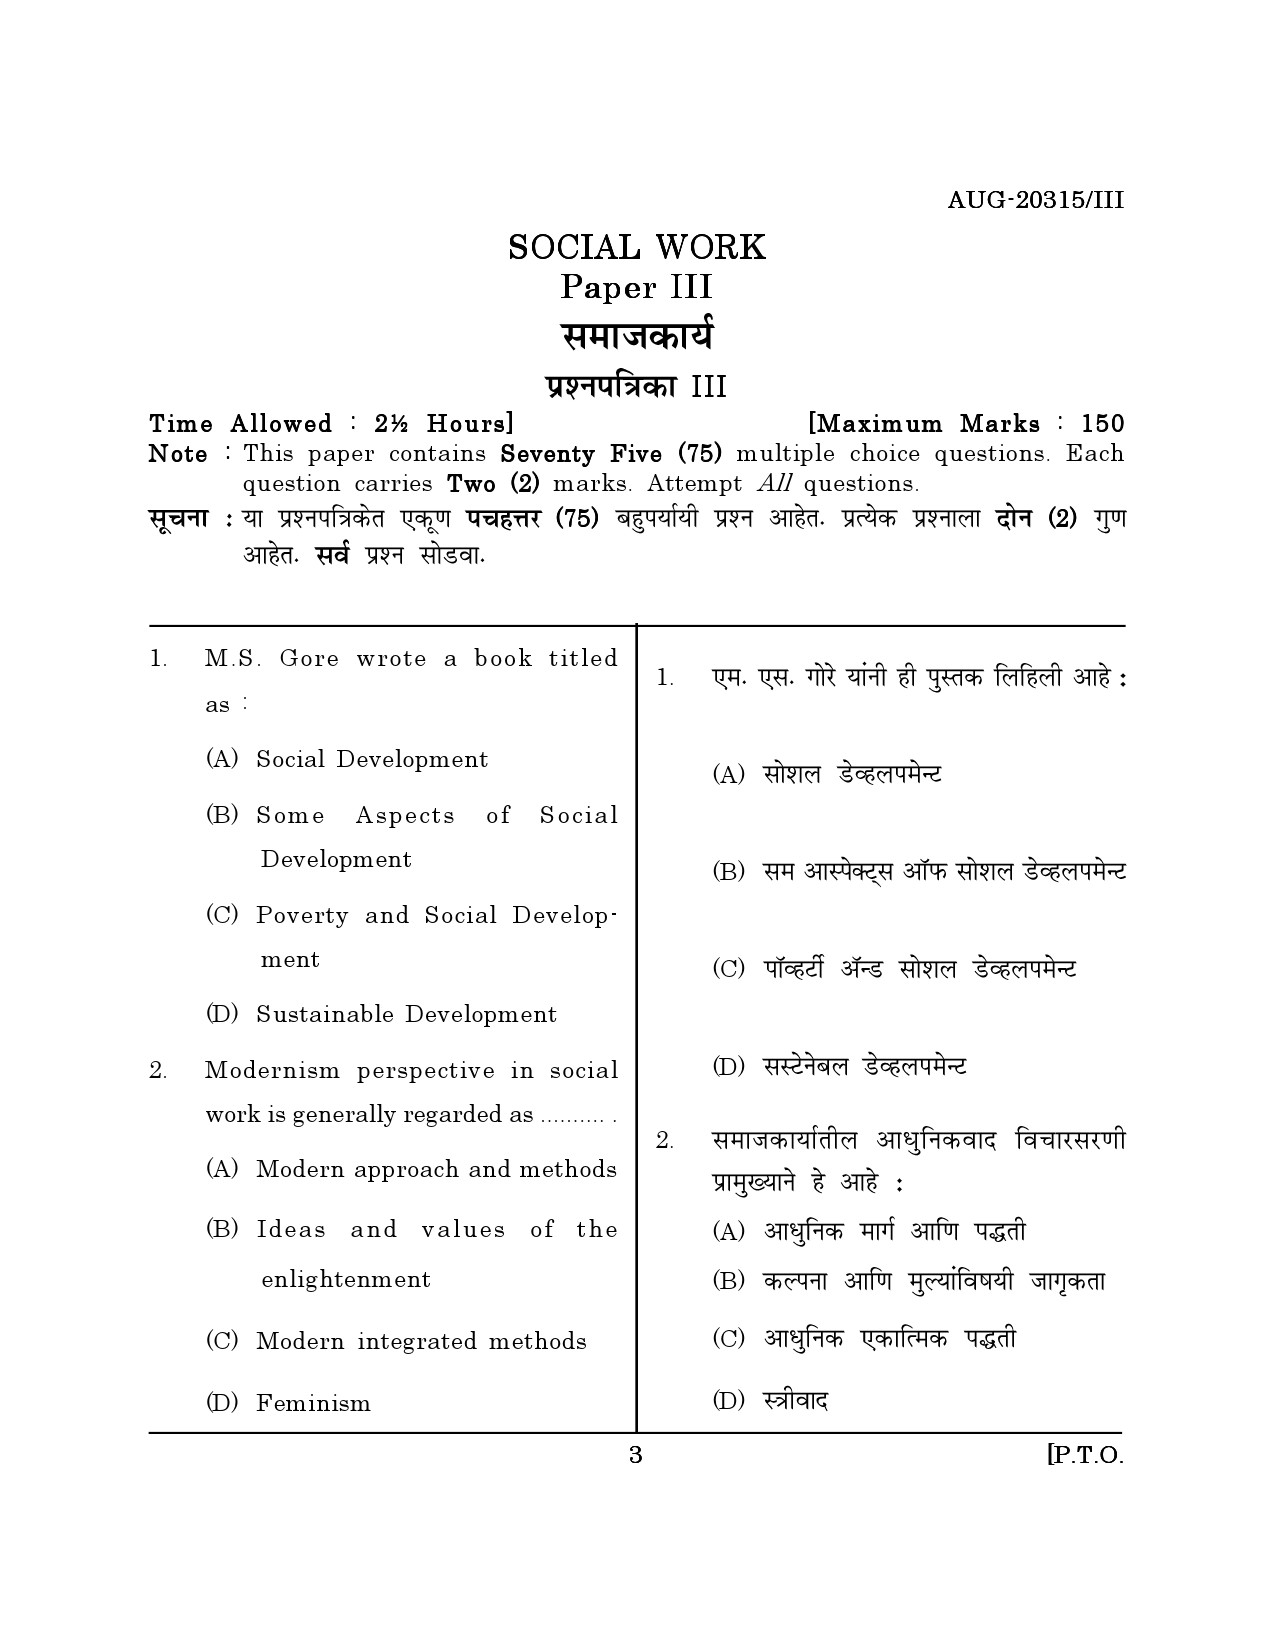 Maharashtra SET Social Work Question Paper III August 2015 2